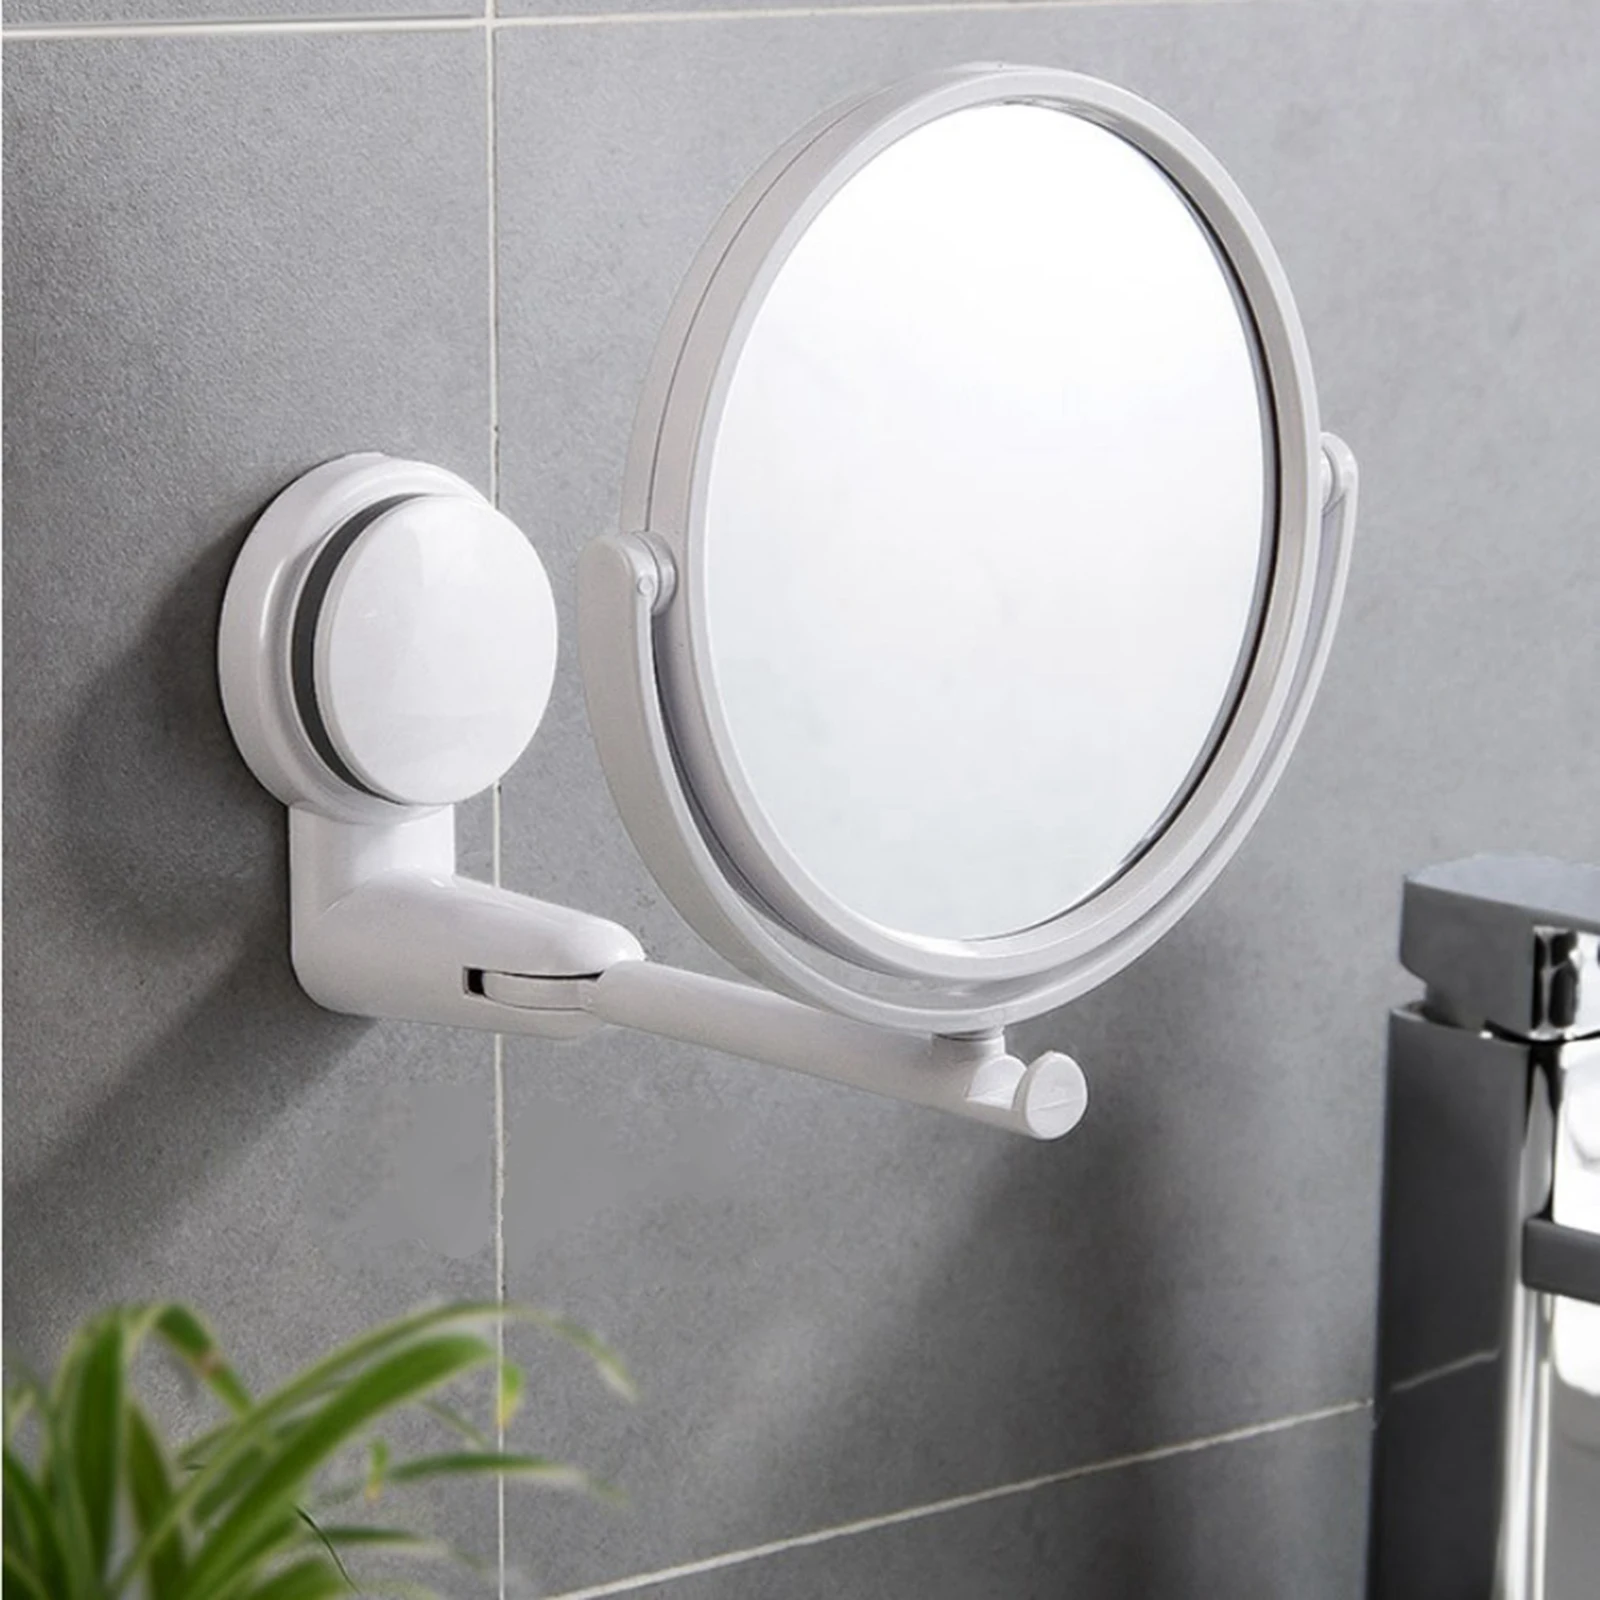 Extending Wall Mounted Mirror Bathroom Makeup Cosmetic Mirror